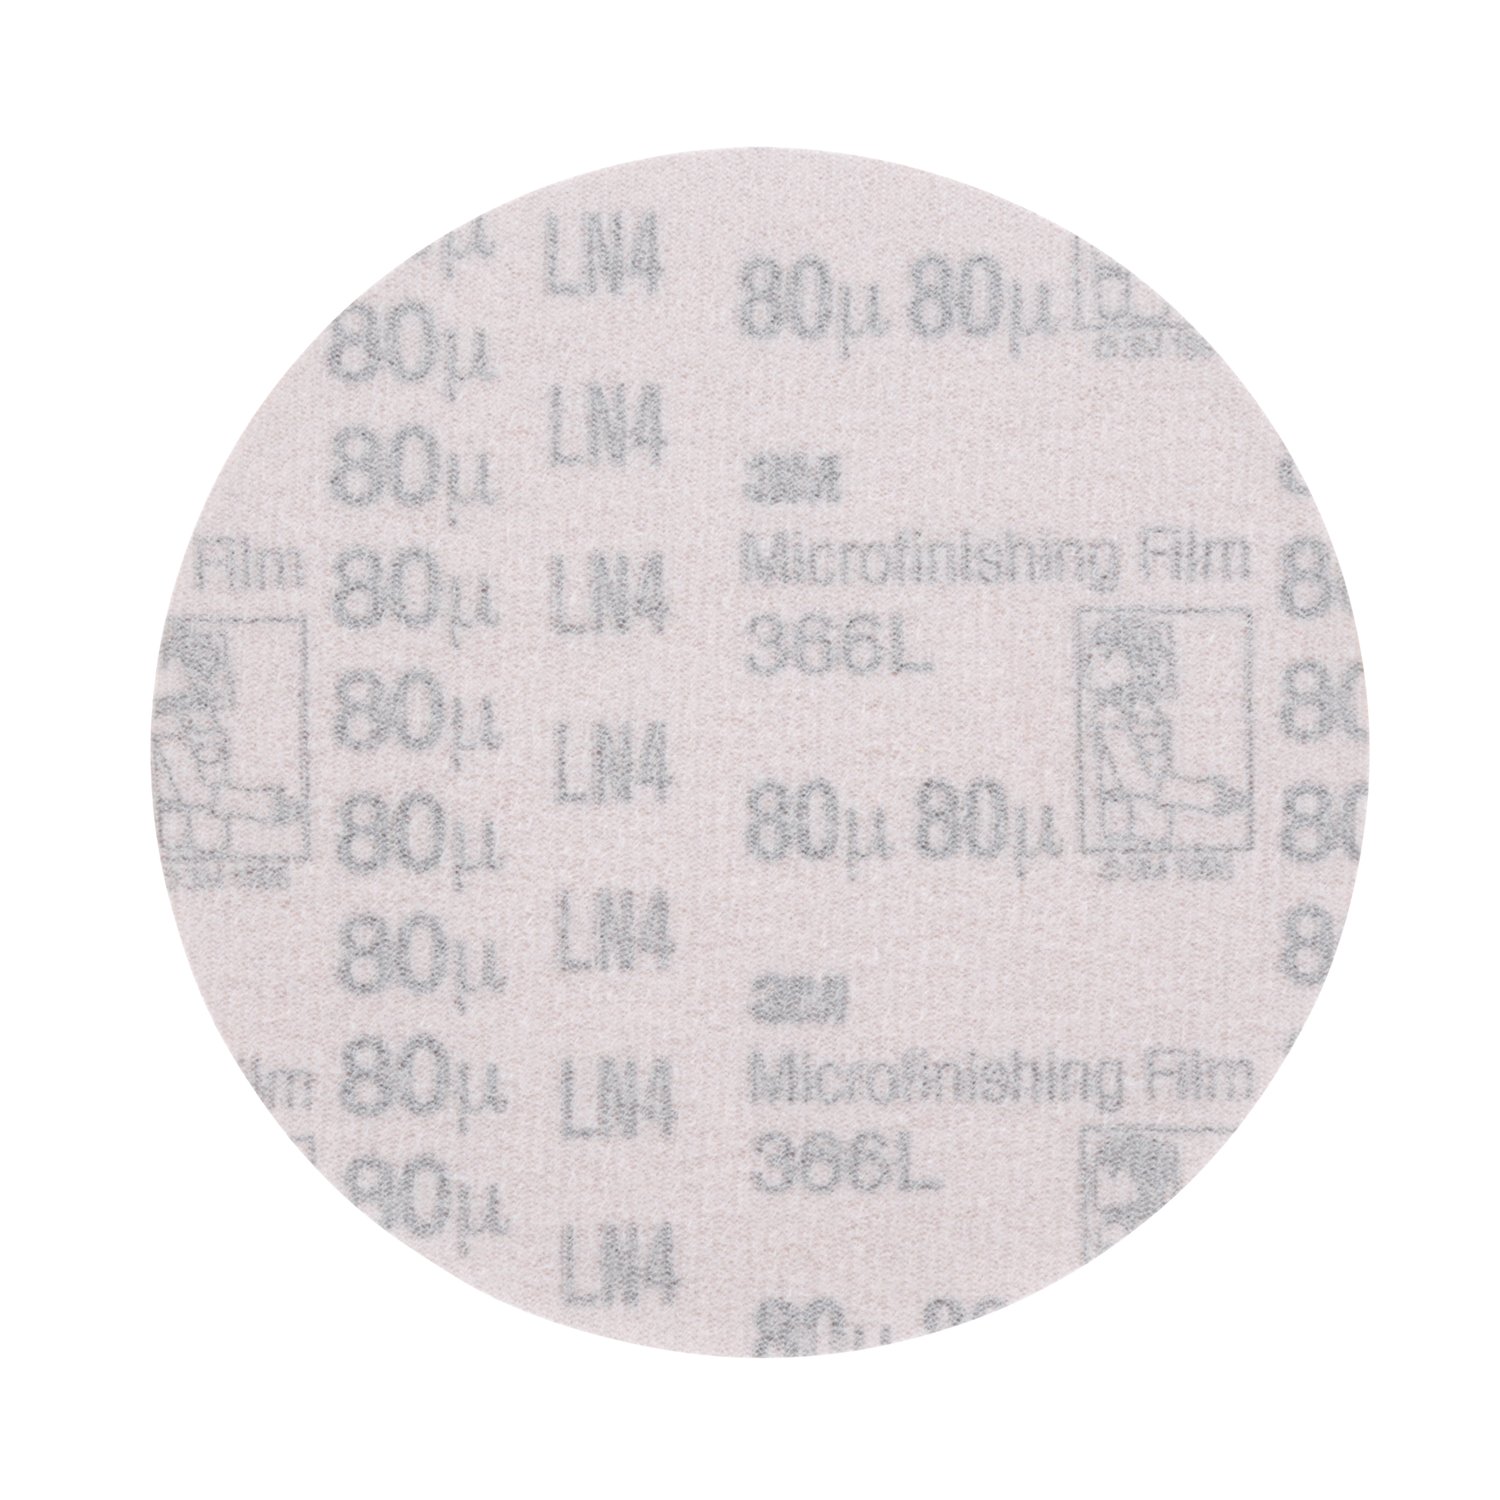 7100012741 - 3M Microfinishing PSA Film Disc 366L, 60 Mic 3MIL, Type D, Config